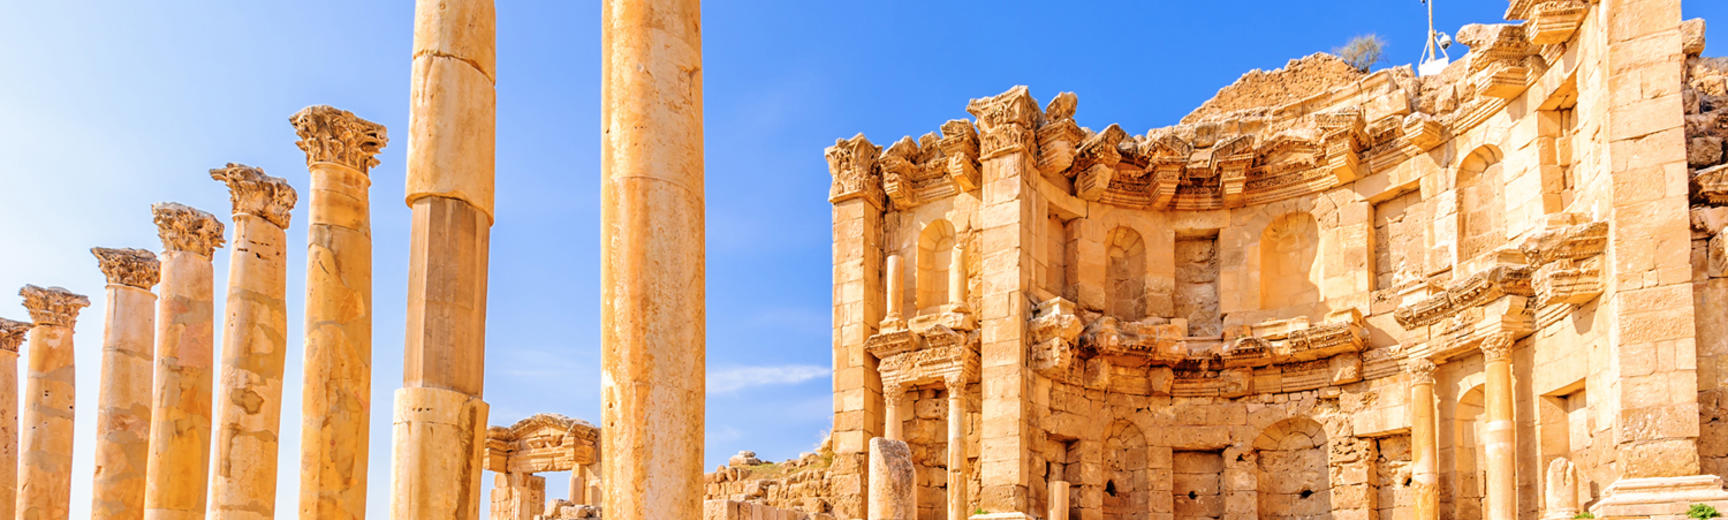 Nymphaeum in the Roman city of Gerasa, preset-day Jerash, Jordan - Shutterstock